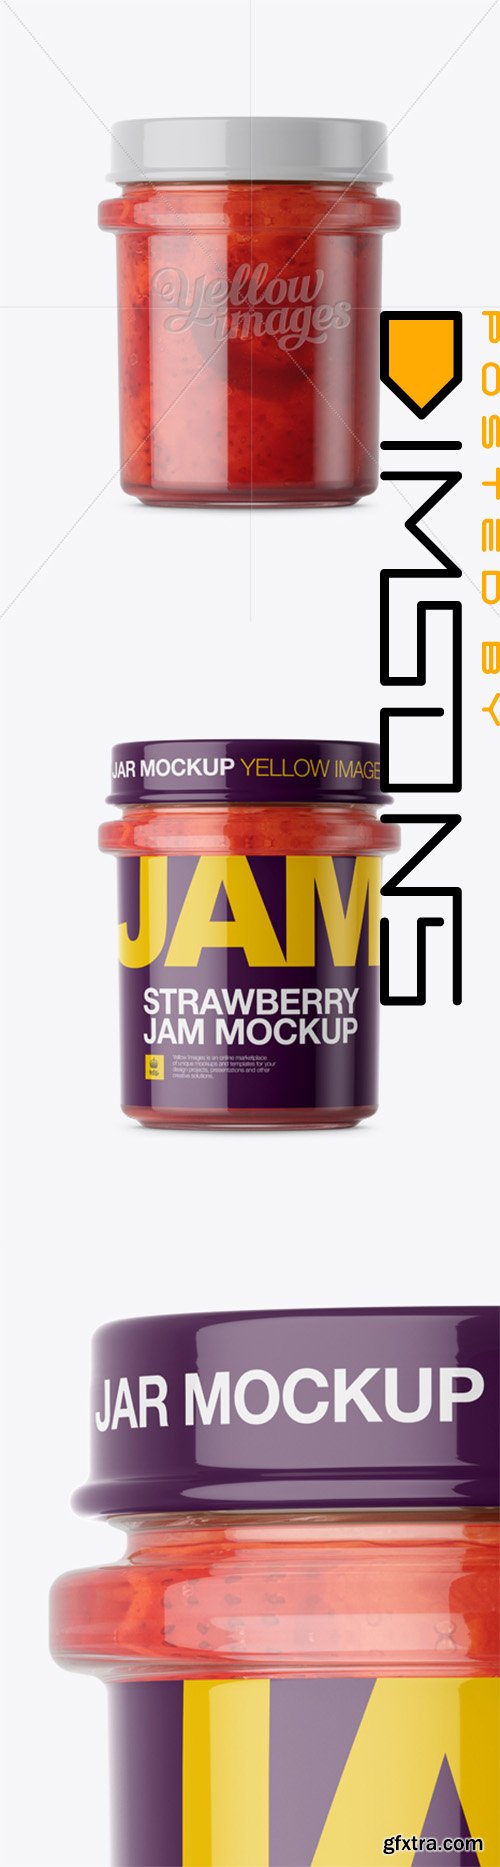 Glass Strawberry Jam Jar Mockup - Front View 13907